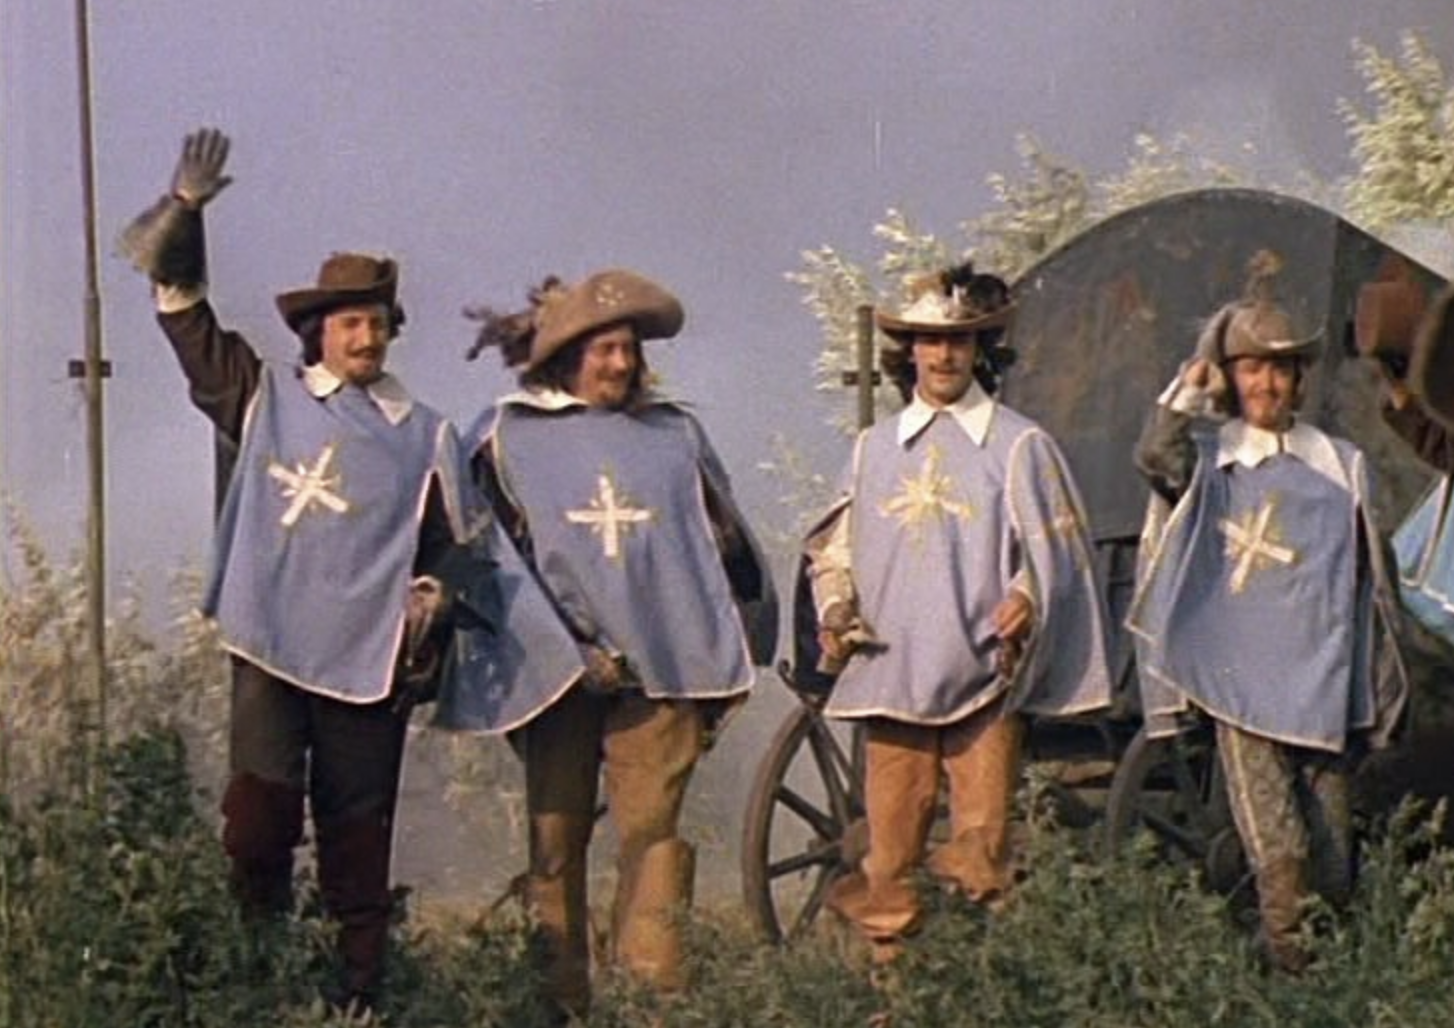 Д'Артаньян и 3 мушкетера. Д'Артаньян и три мушкетера 1979. Дантаньео и 3 мушкетера. Четверо мушкетеров